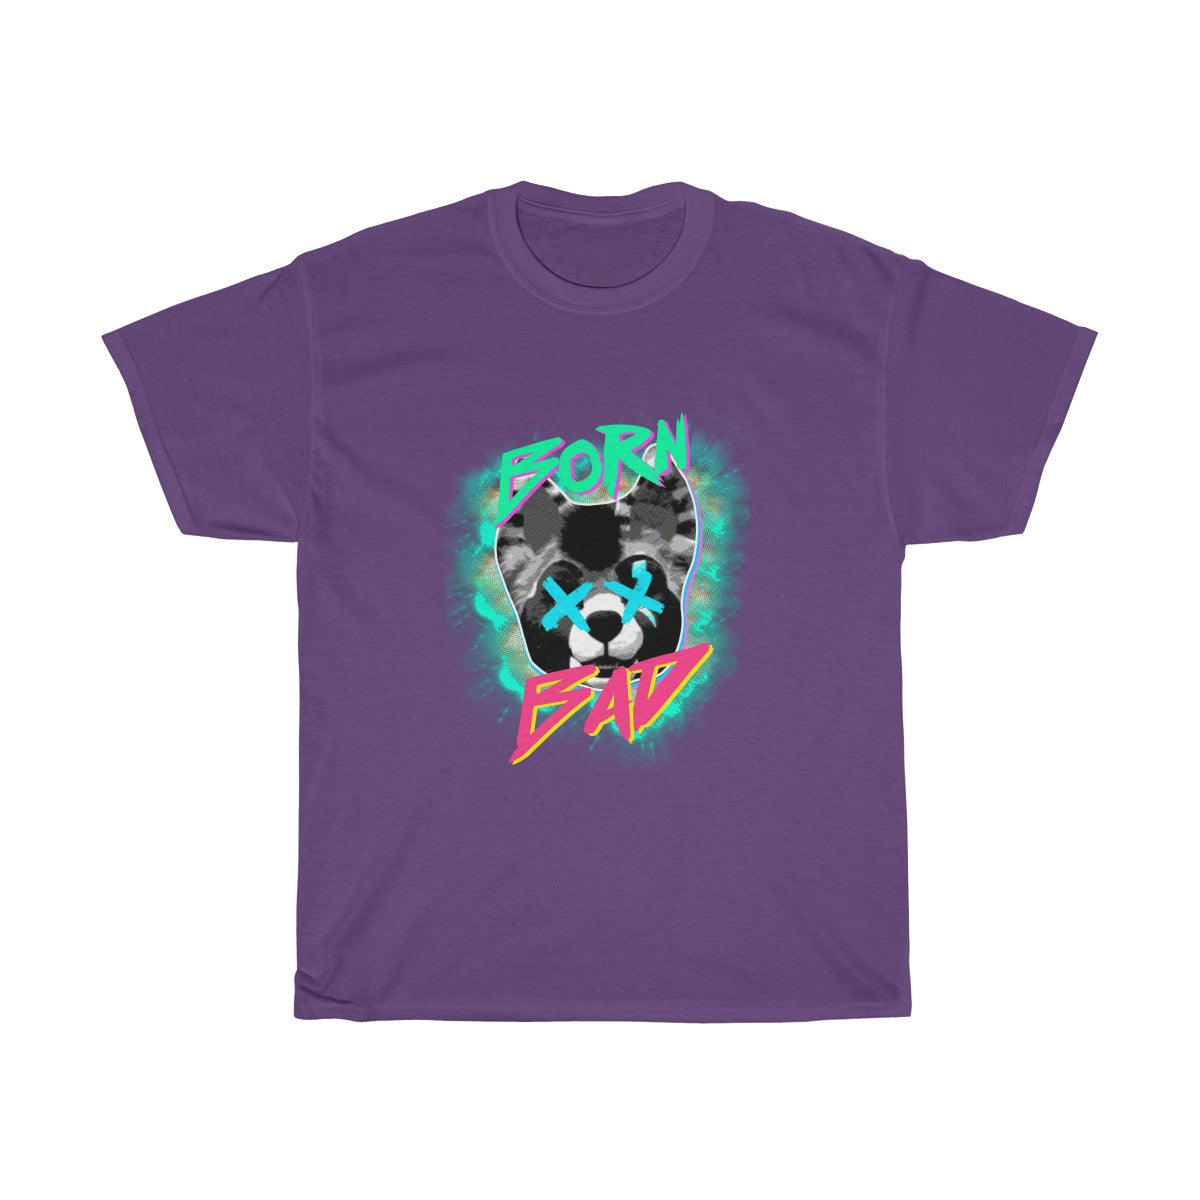 Born Bad - T-Shirt T-Shirt Corey Coyote Purple S 